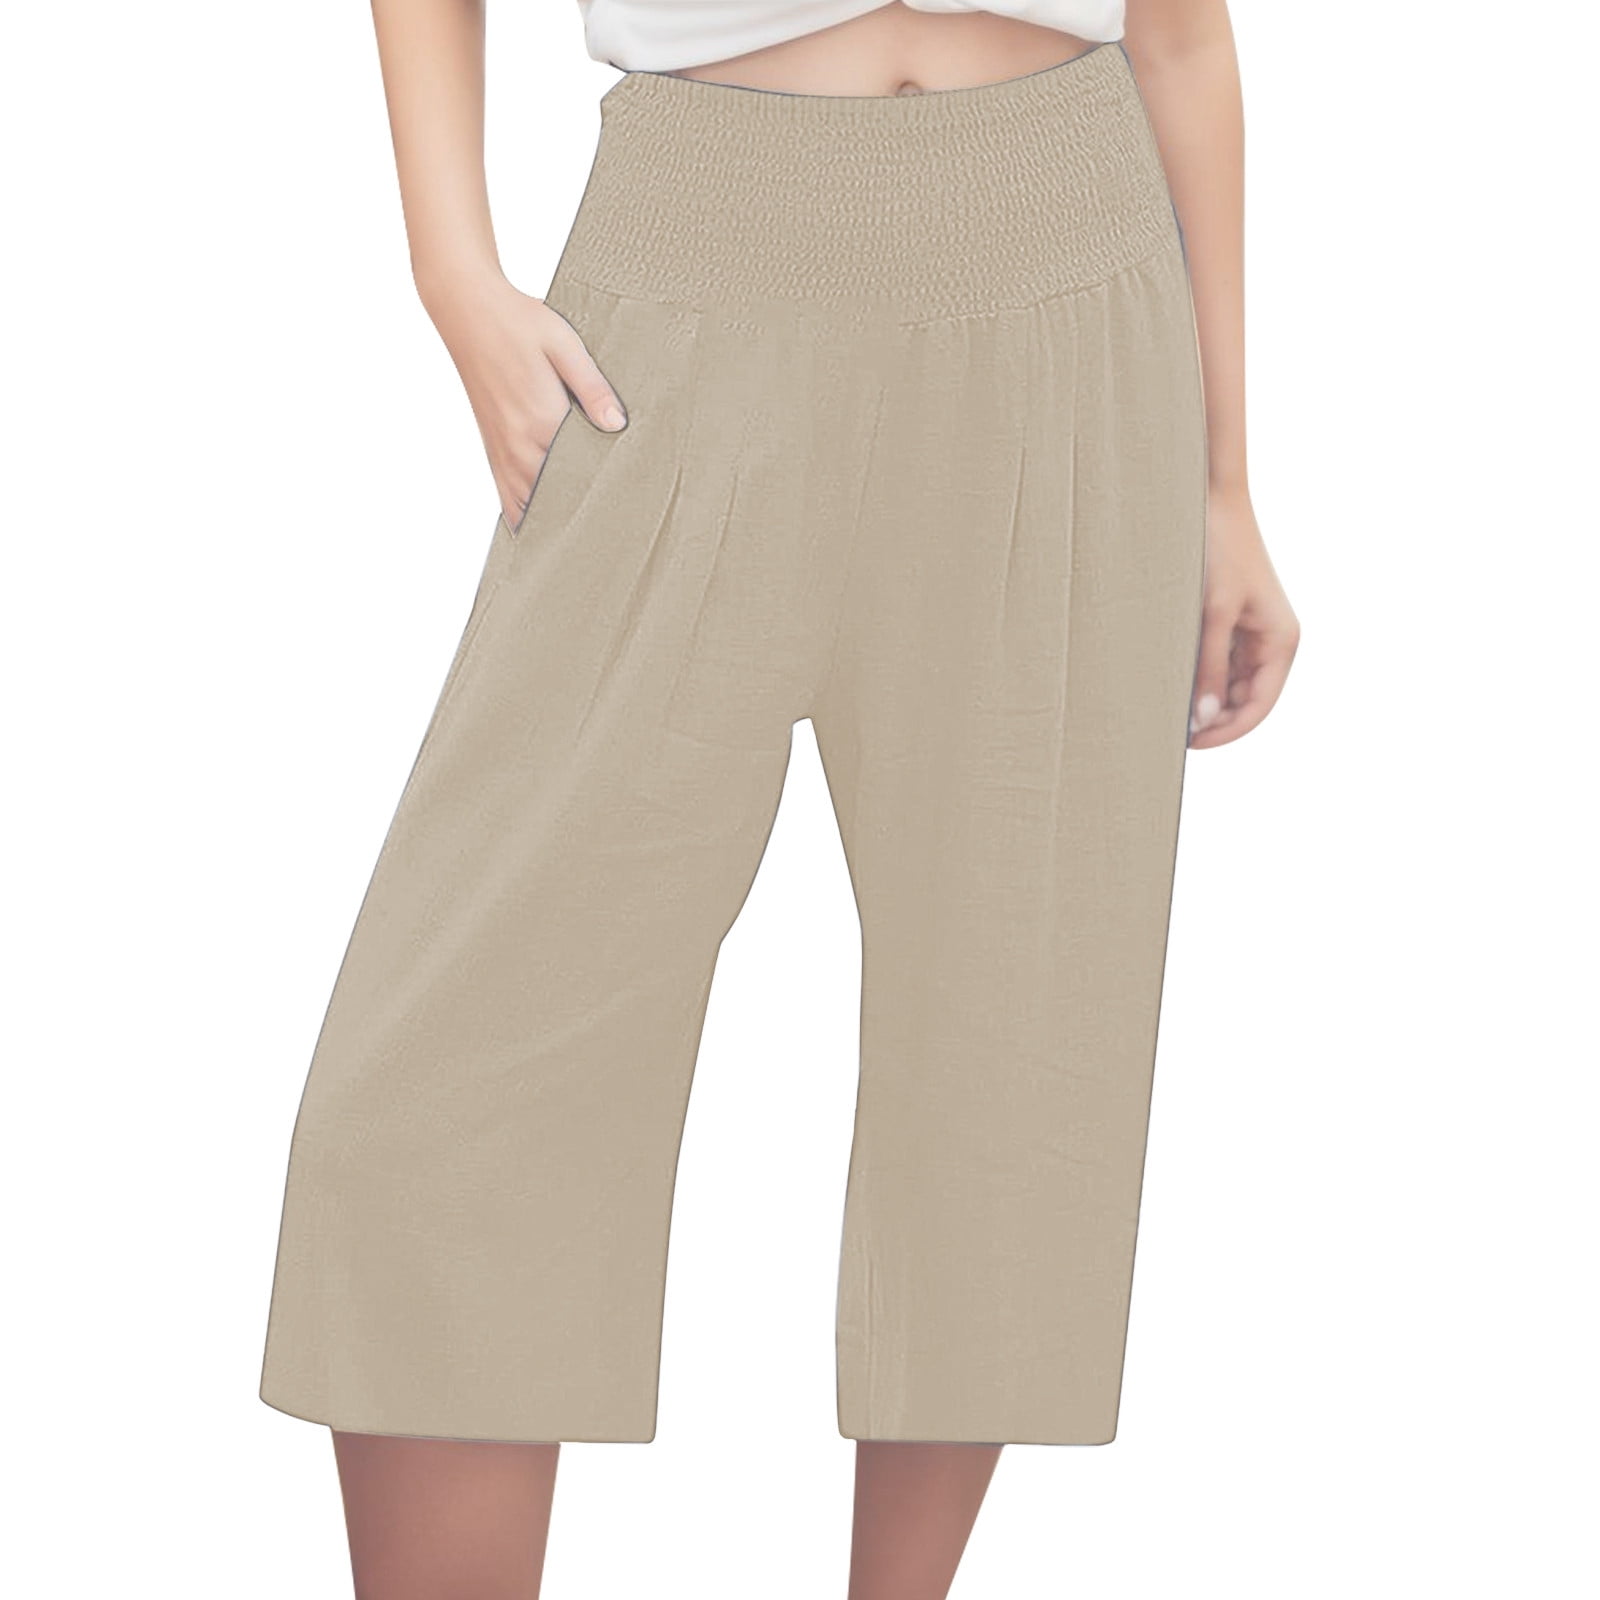 Capri Pants for Women Casual Summer Drawstring High Waist Cropped ...